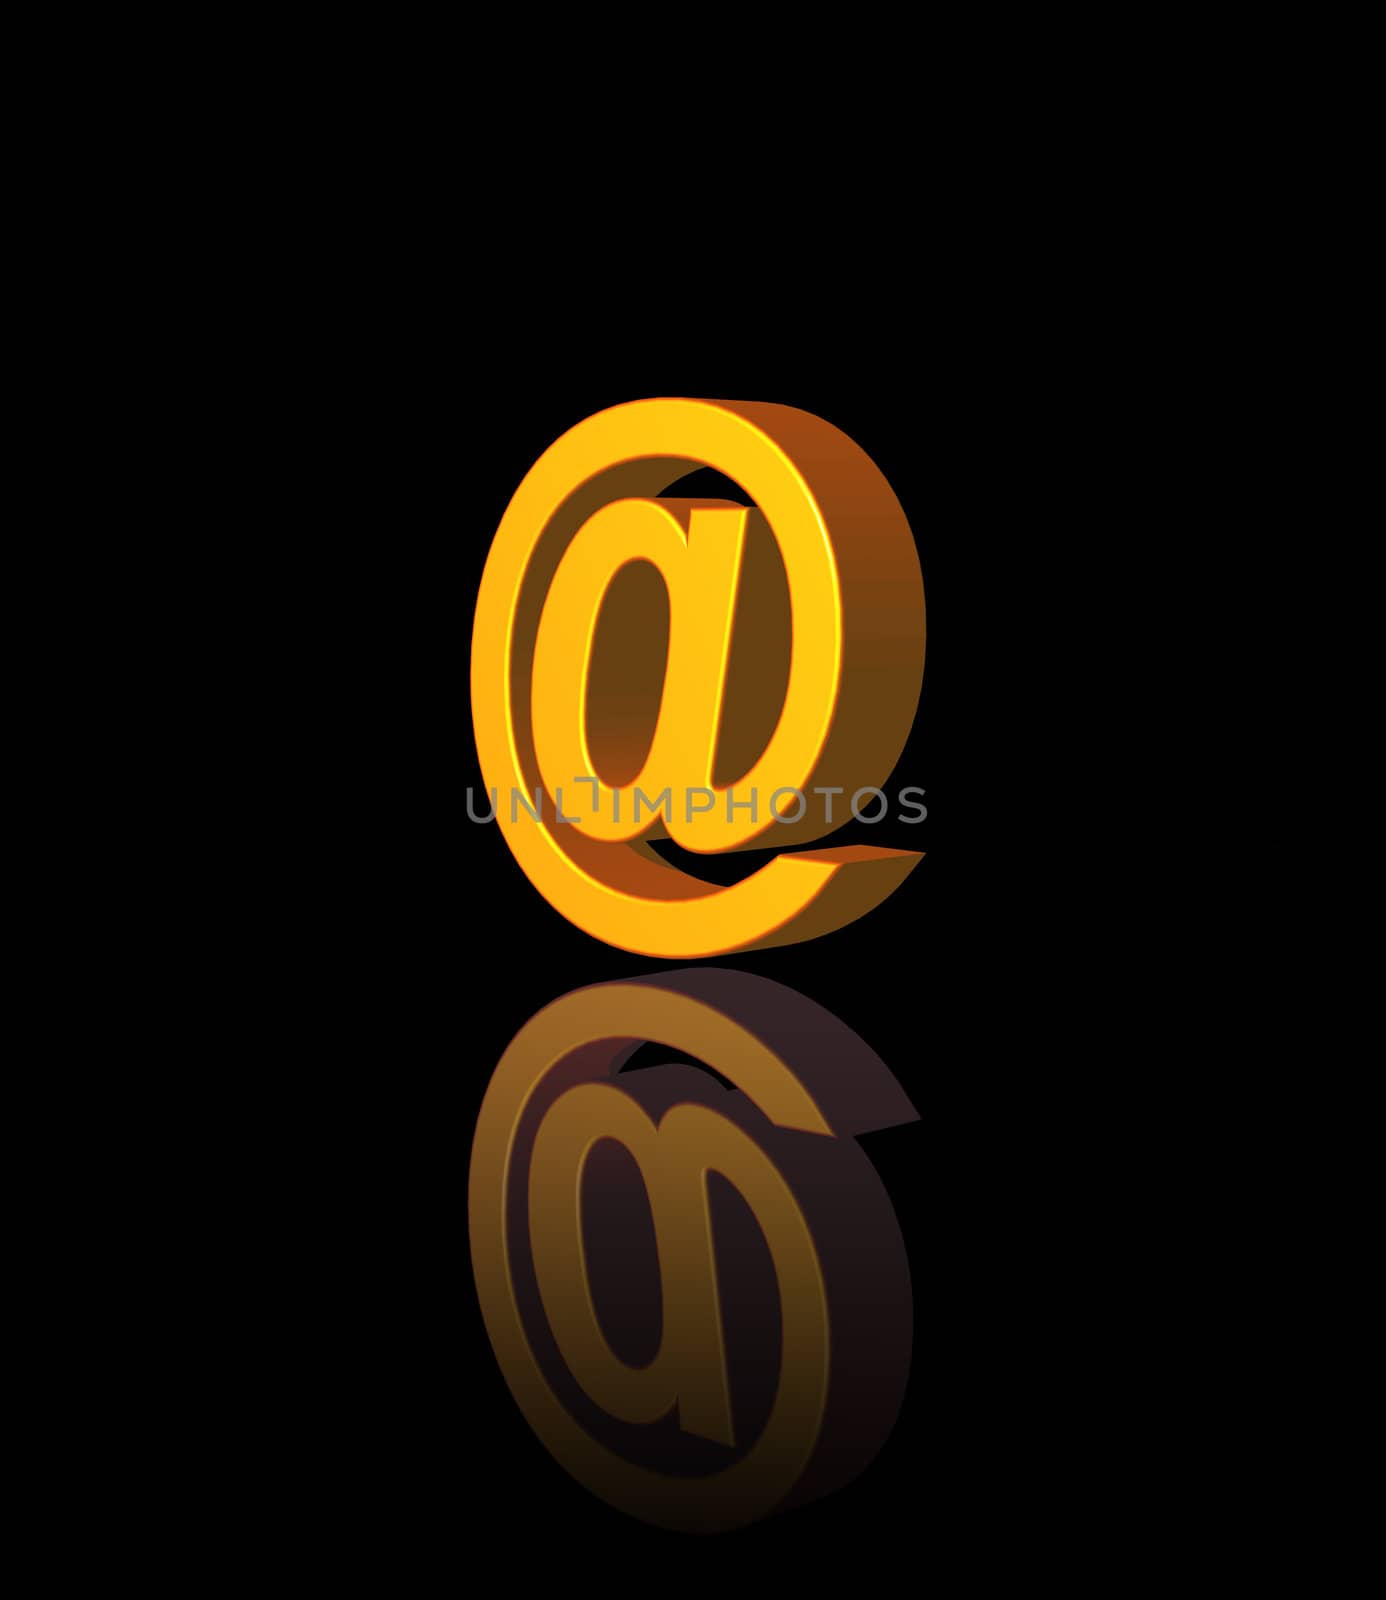 email alias on black background - 3d illustration